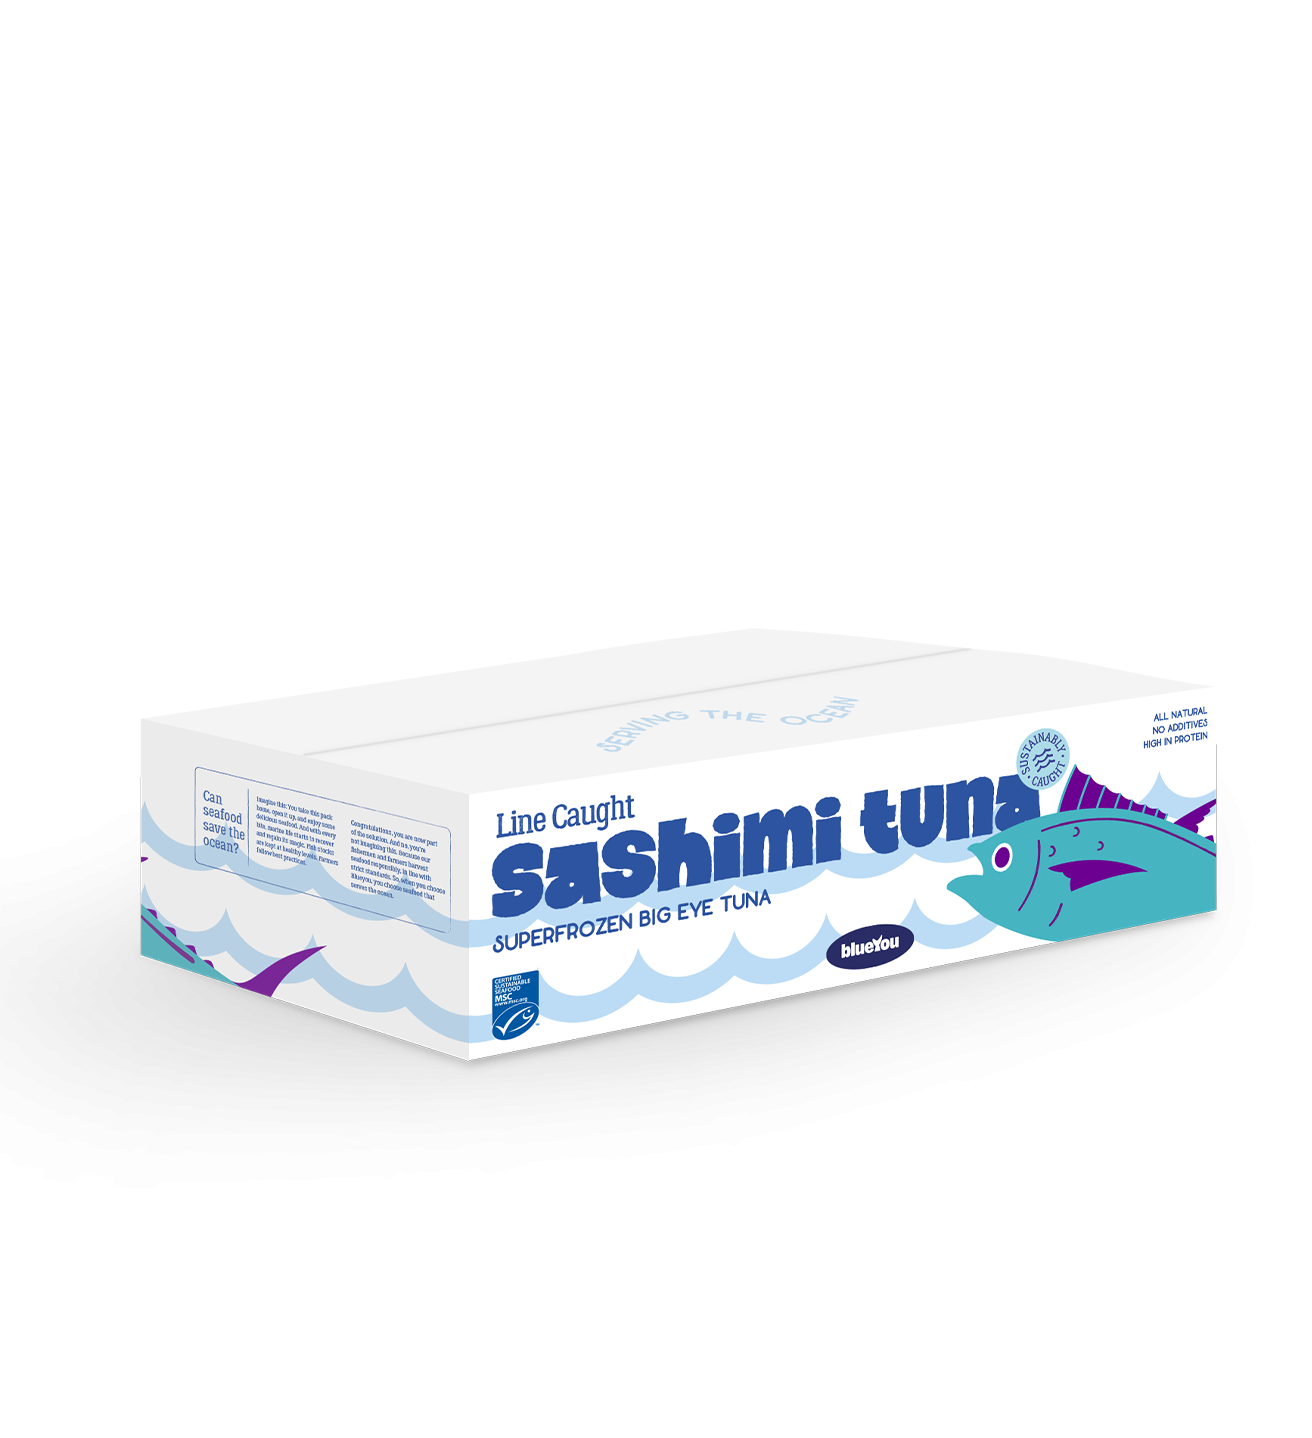 Sashimi Big Eye Tuna fresh mastercase MSC 1312x1438